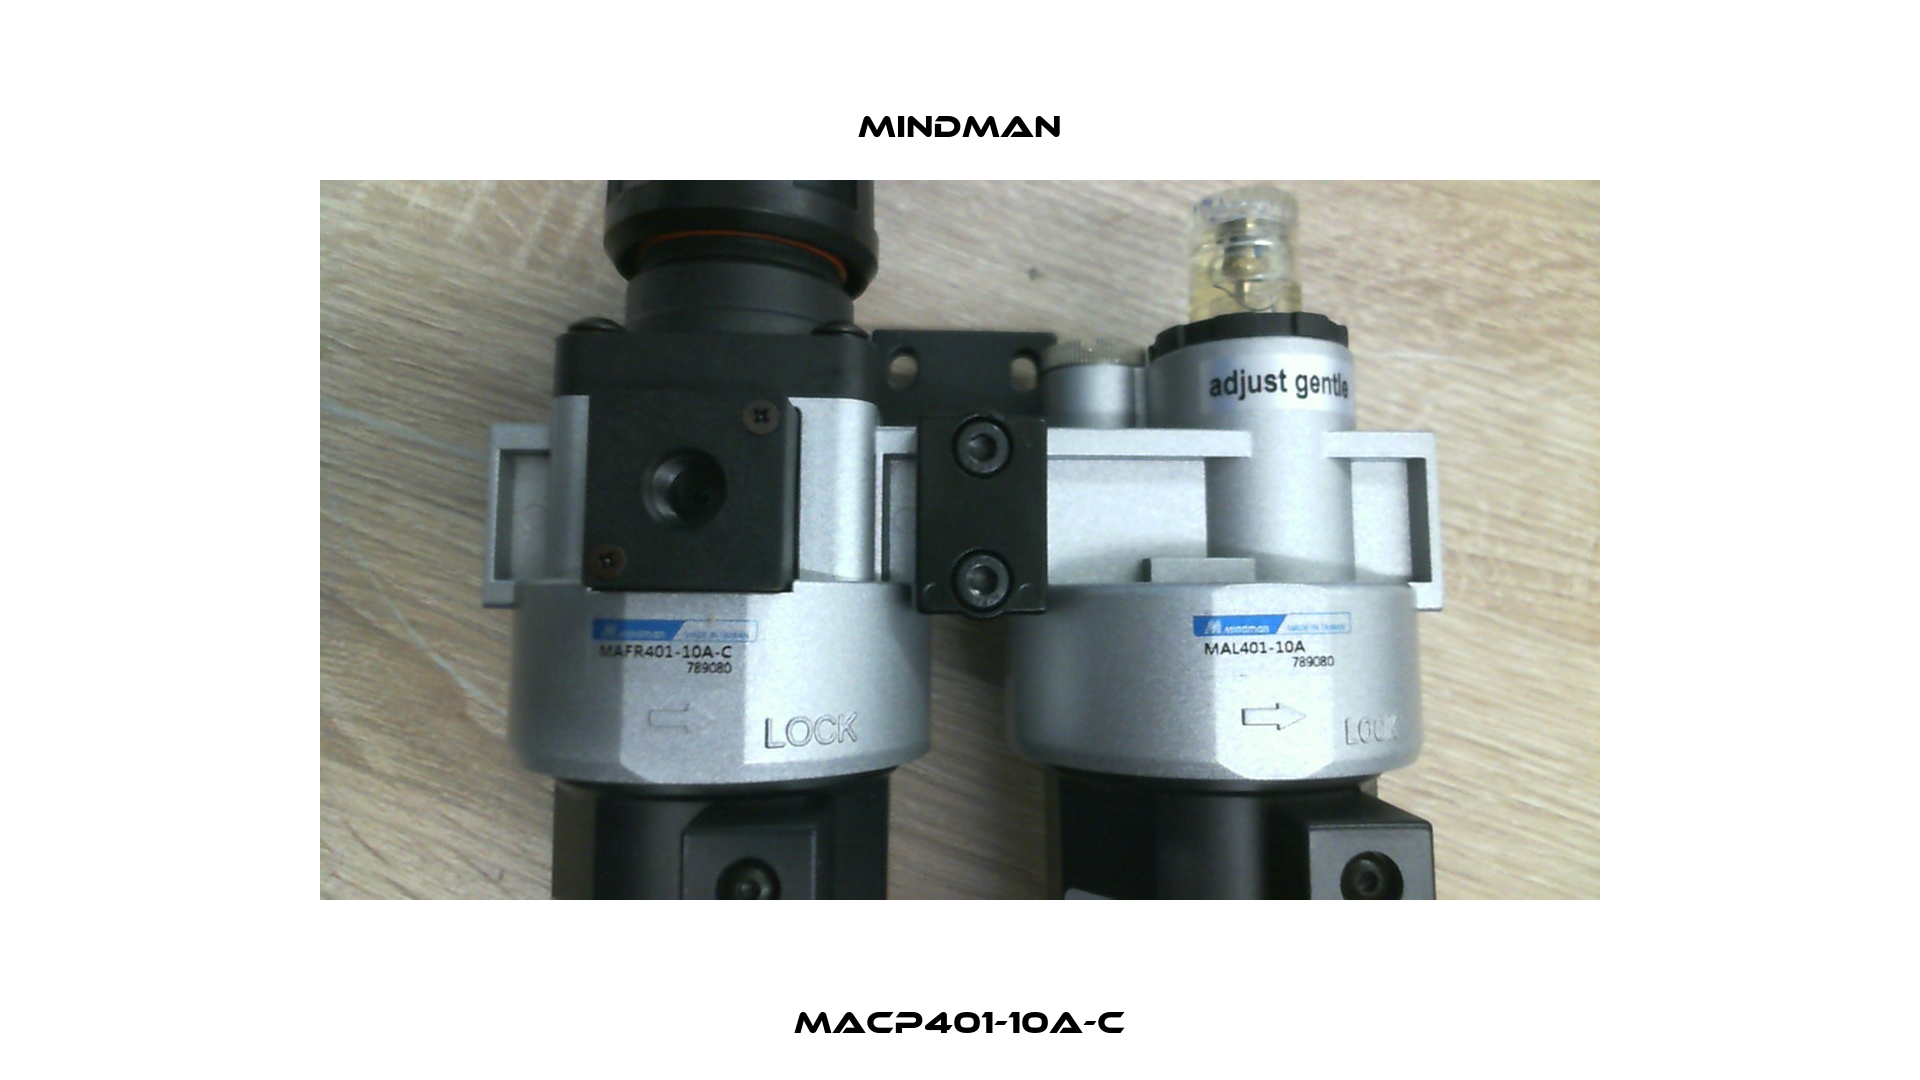 MACP401-10A-C Mindman